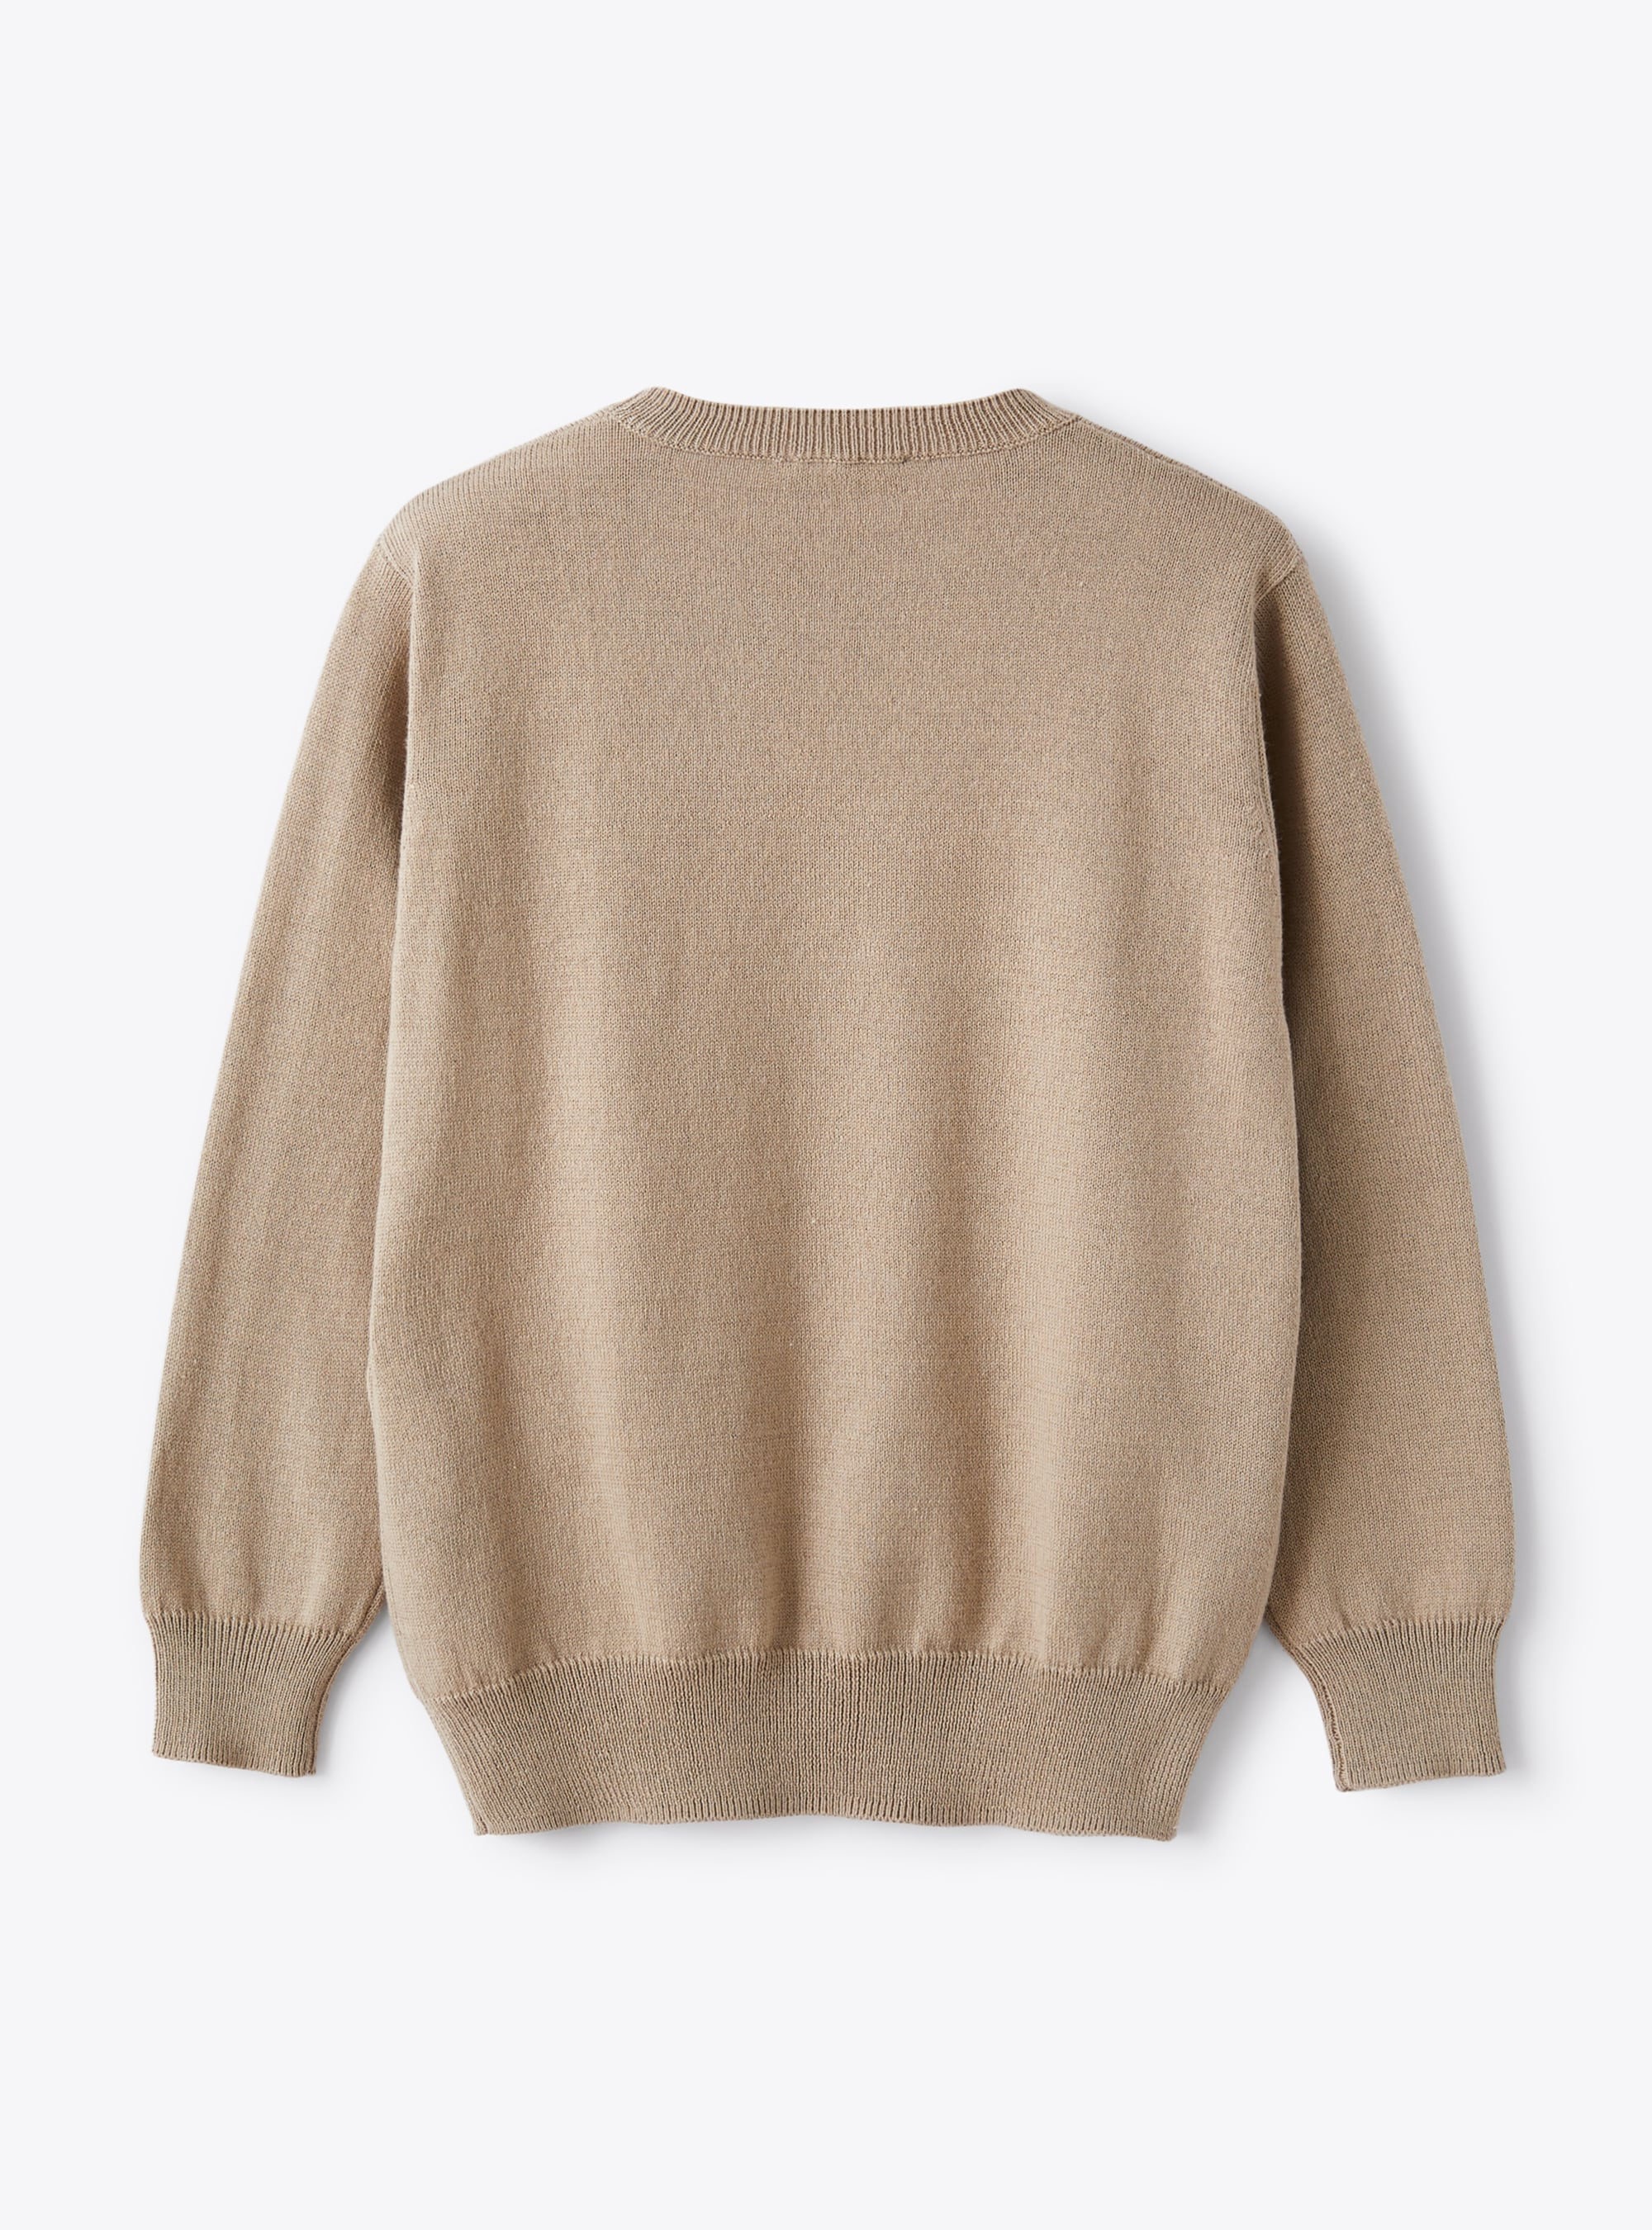 Sweater in organic beige cotton - Beige | Il Gufo